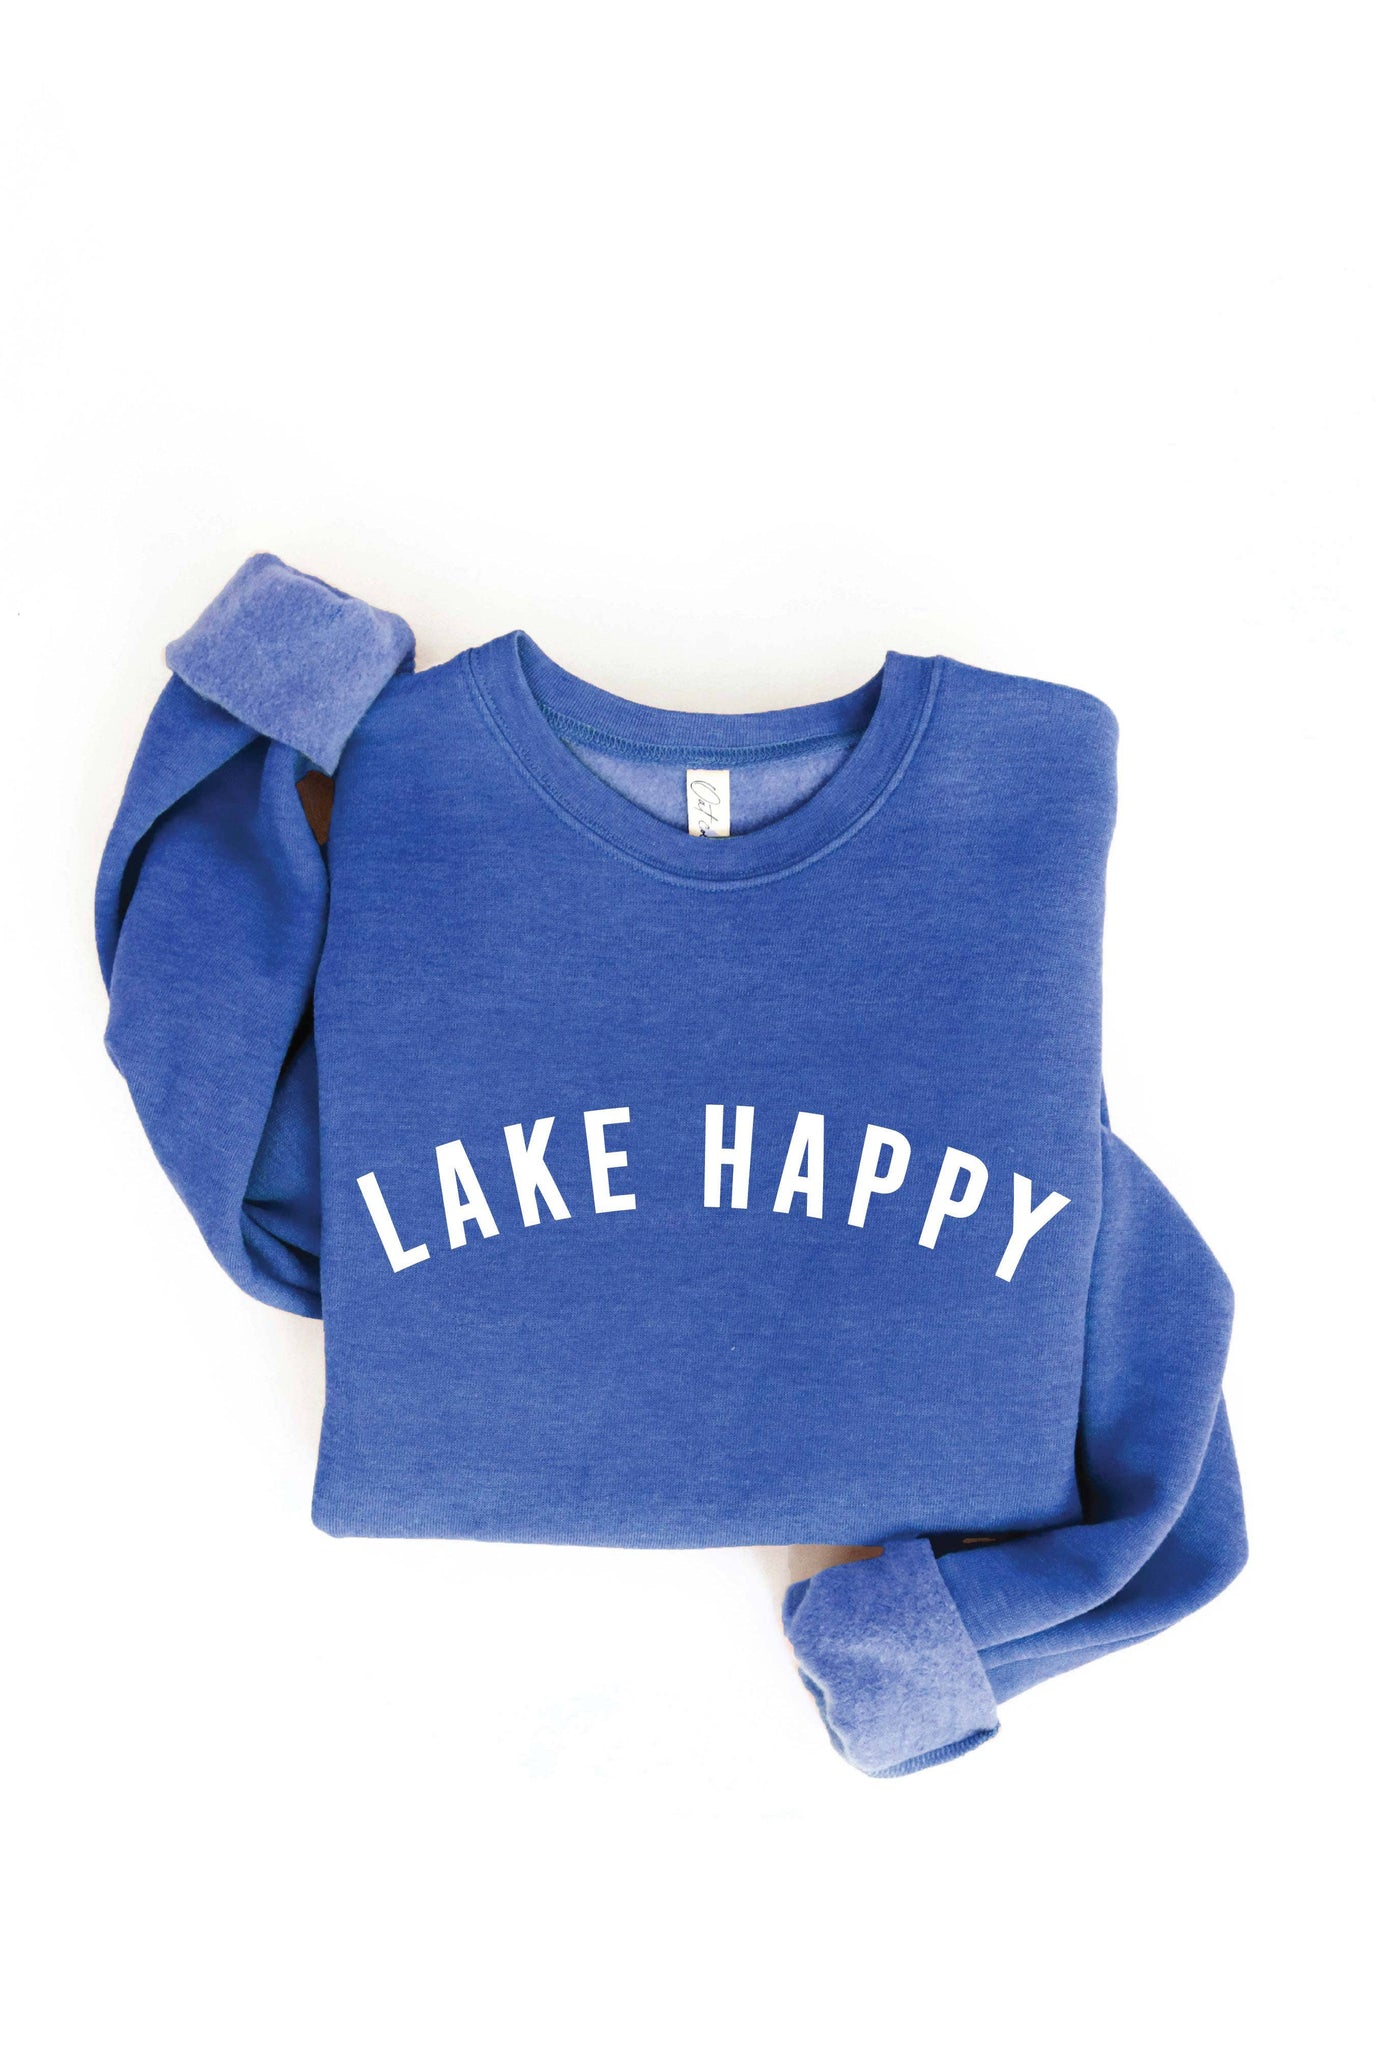 LAKE HAPPY Blue Sweatshirt